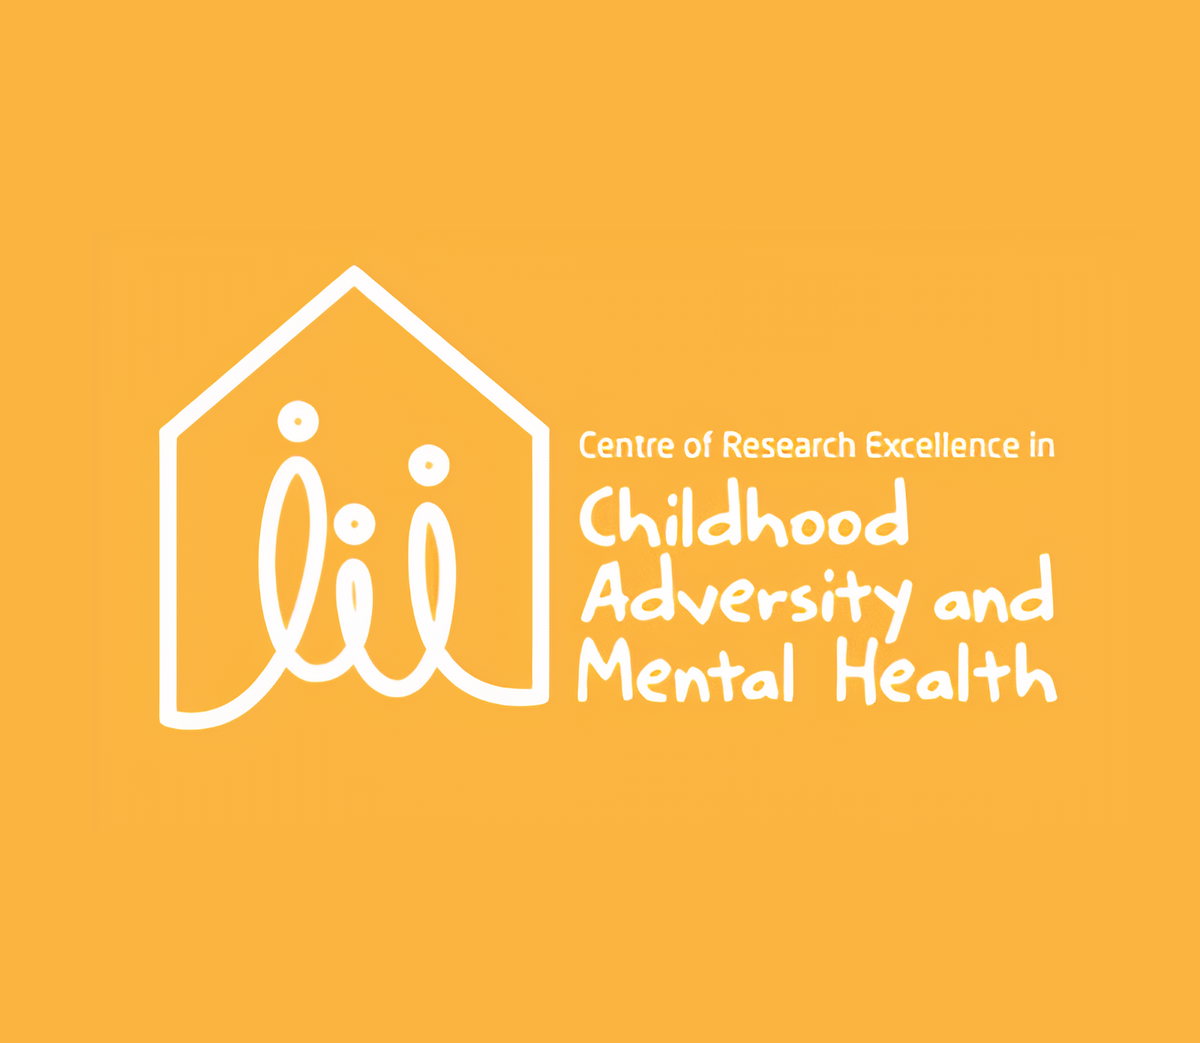 CRE Childhood Adversity logo